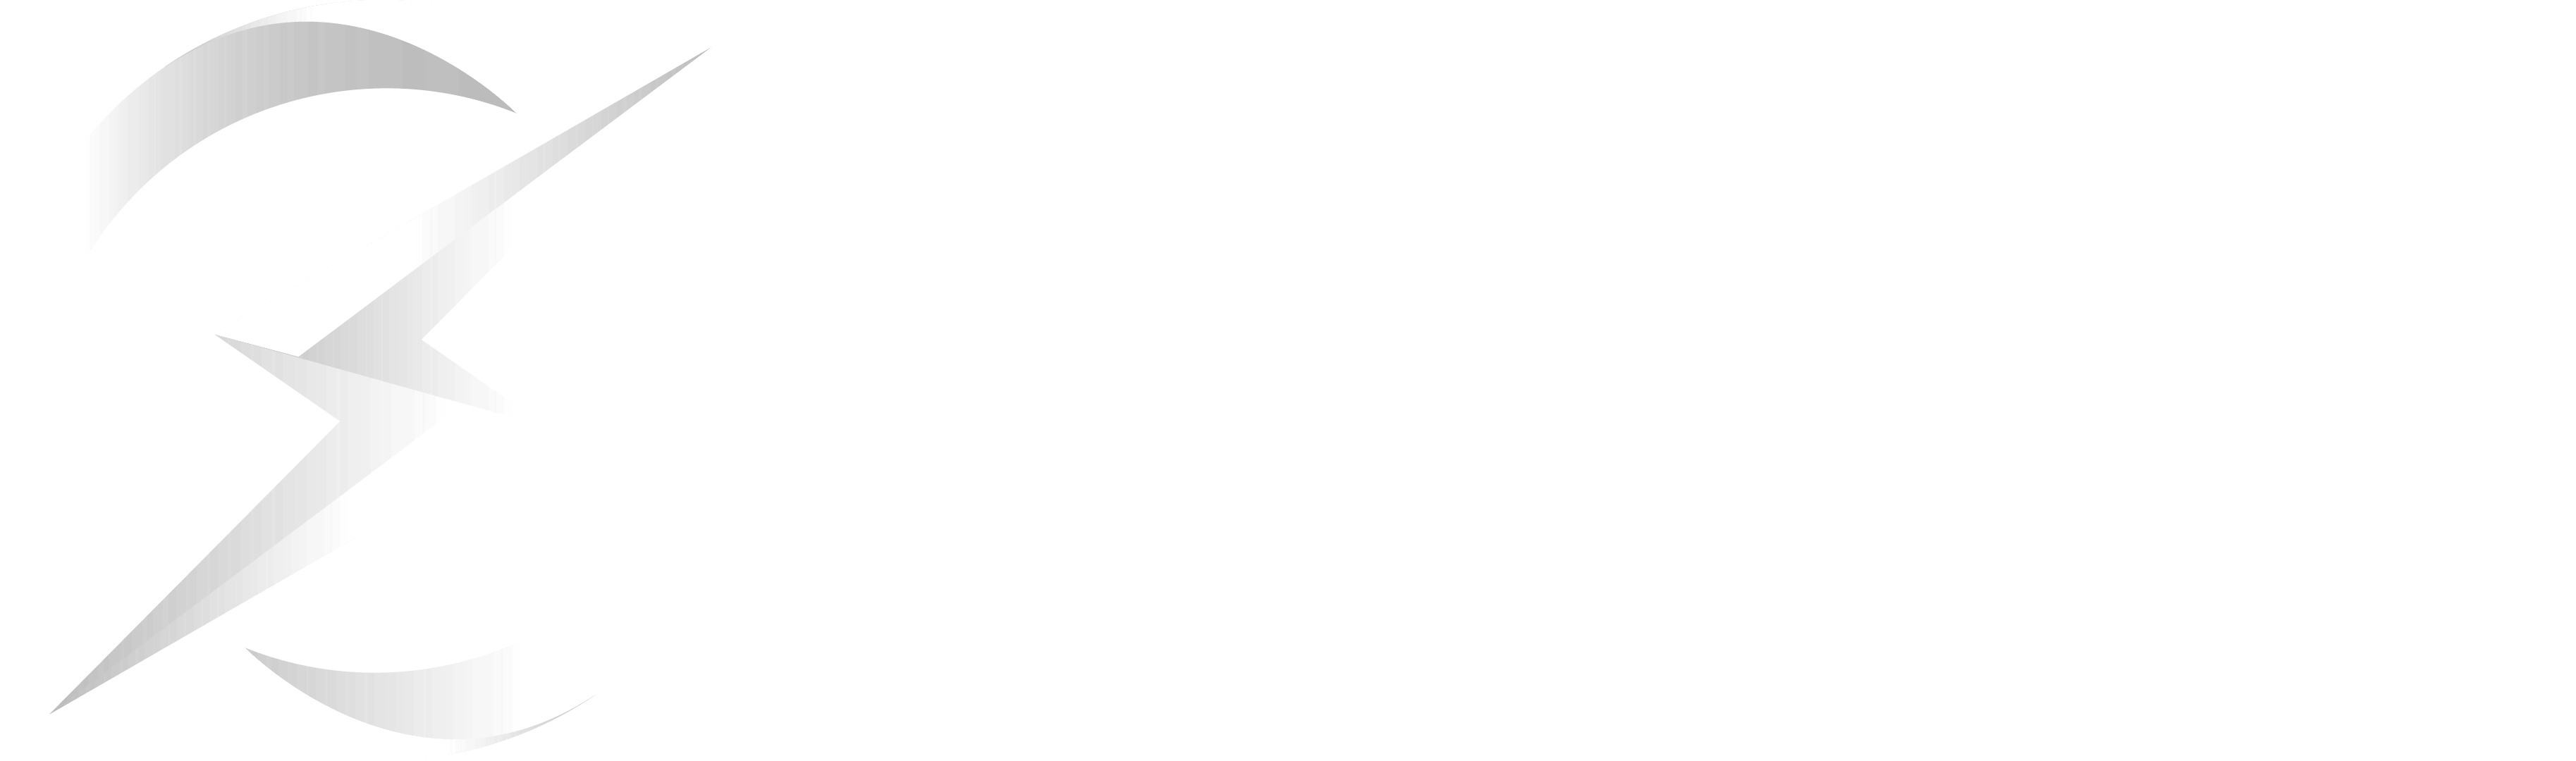 Thunderbolt International Logistics Logo White